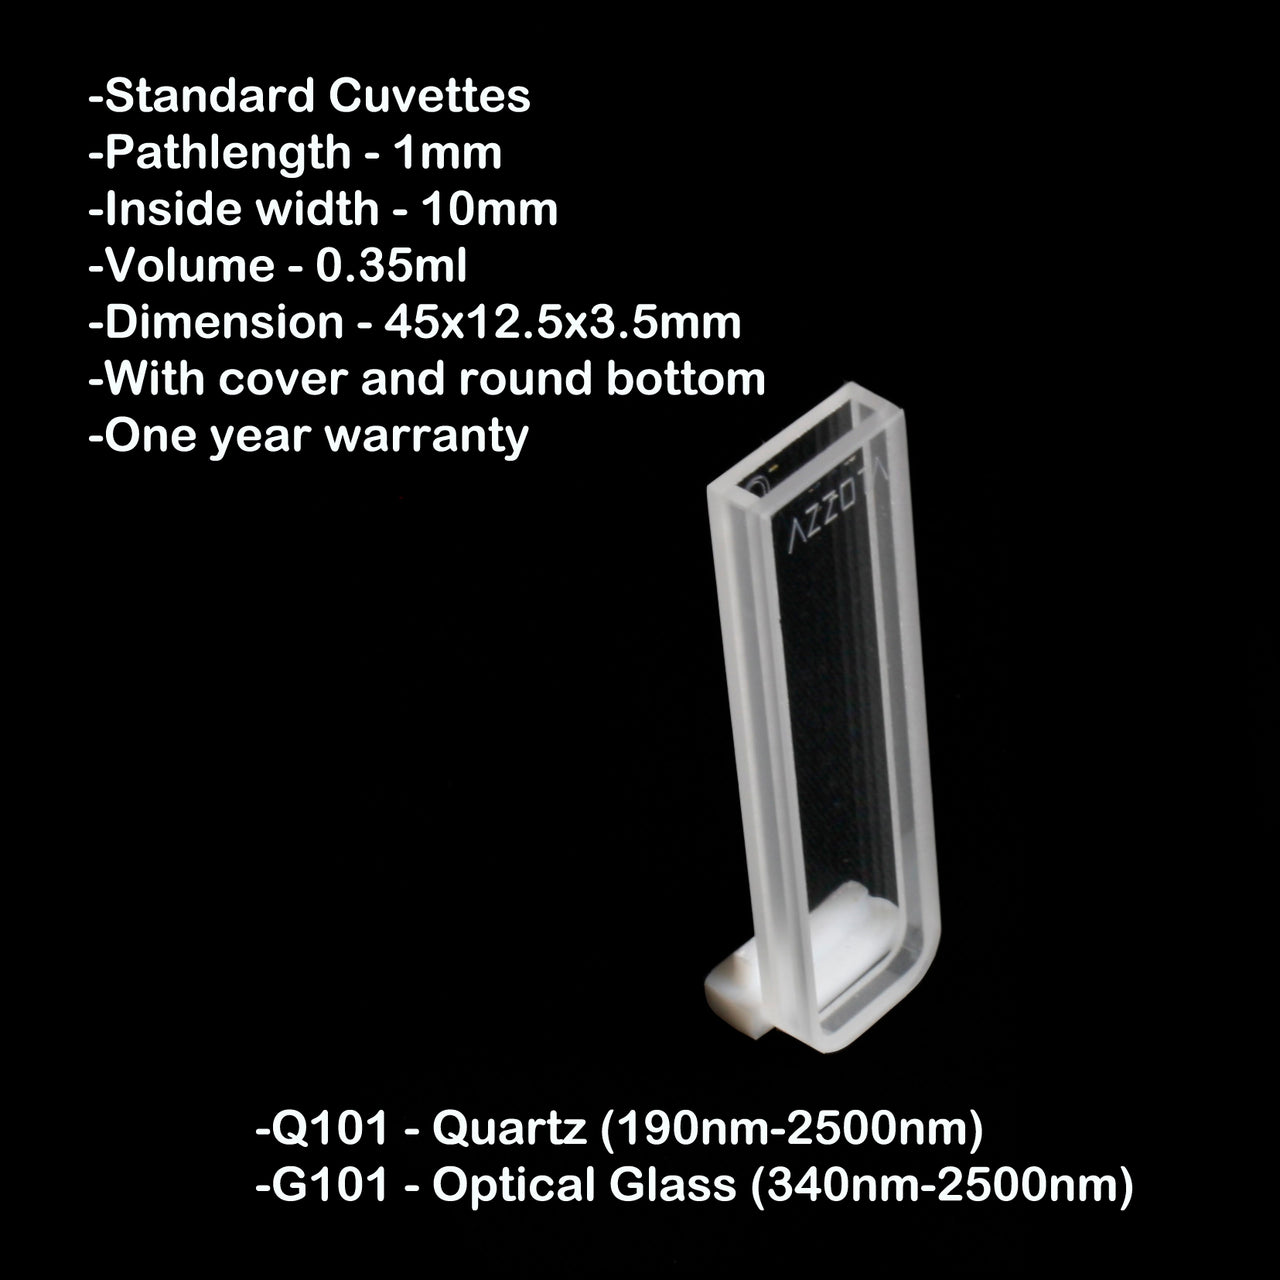 1mm Pathlength Standard Cuvette - 0.35ml